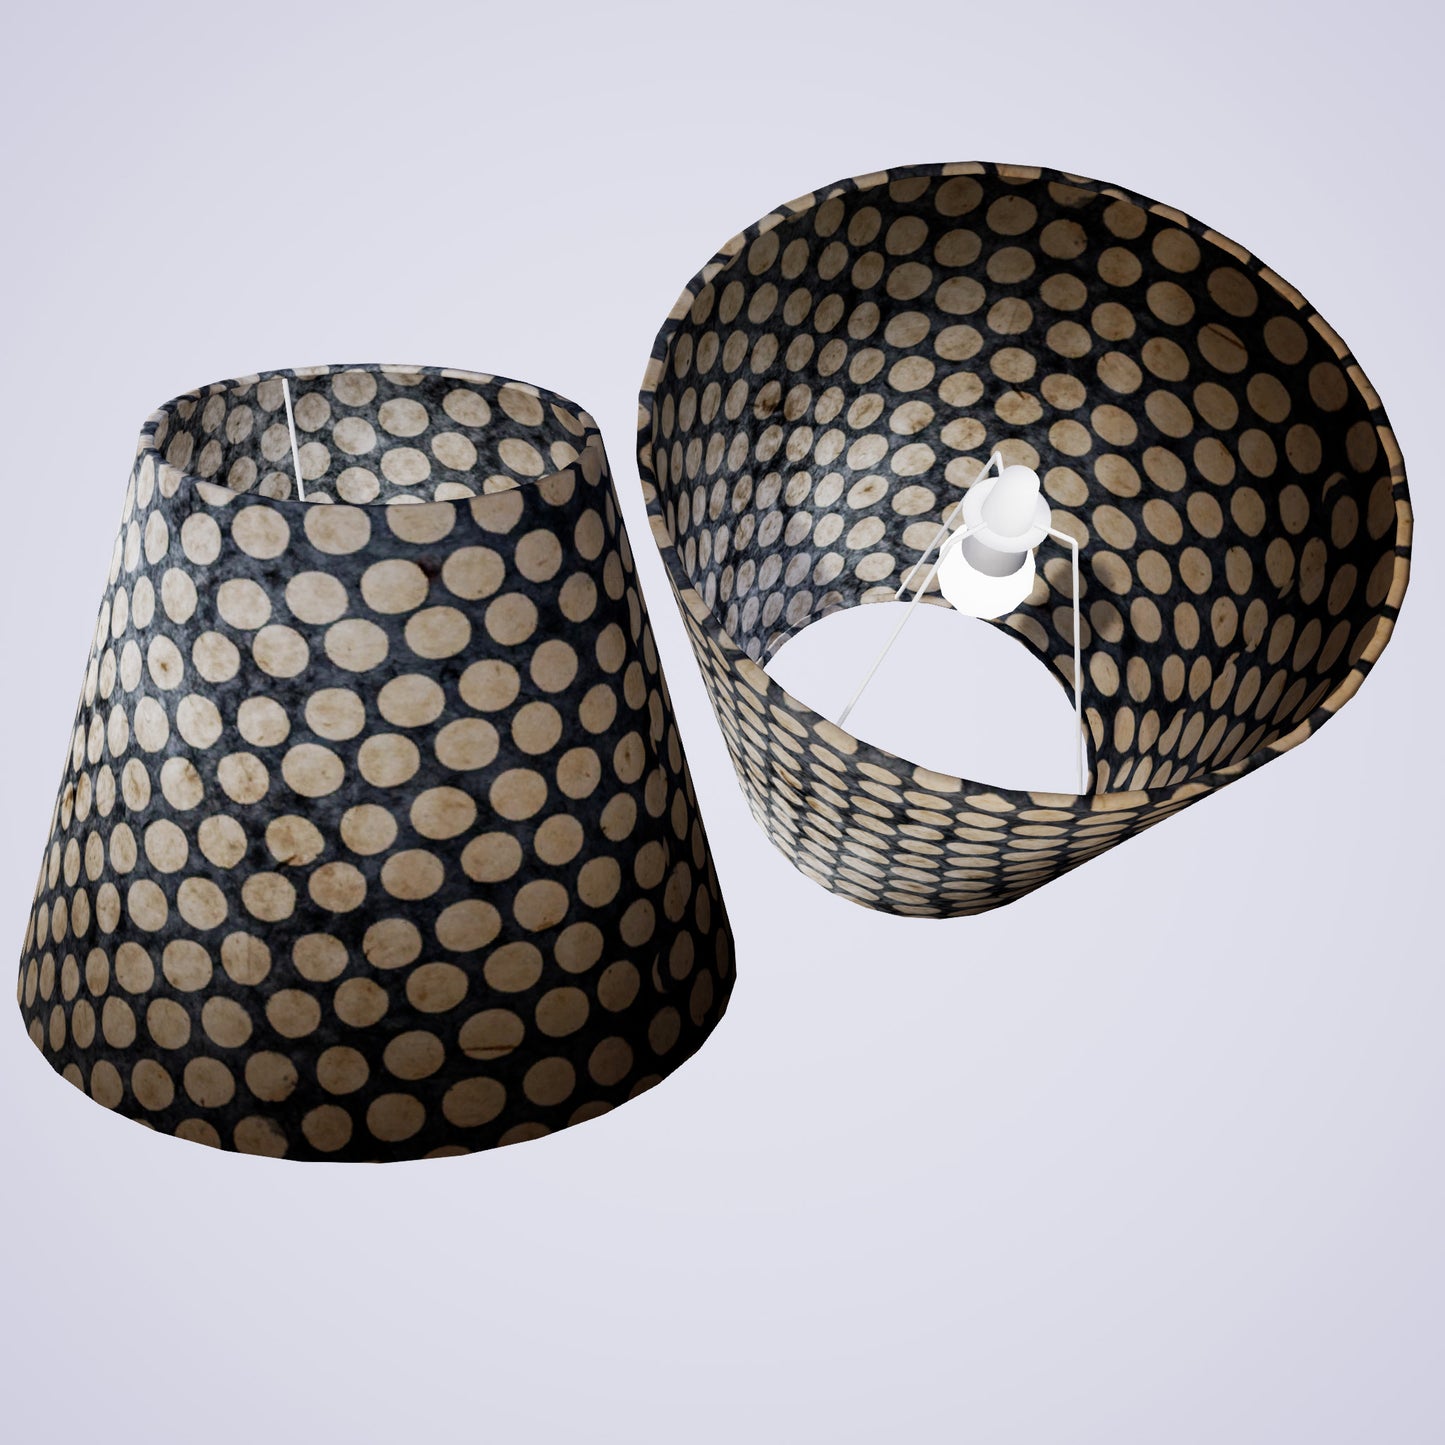 Conical Lamp Shade P78 - Batik Dots on Grey, 23cm(top) x 40cm(bottom) x 31cm(height)